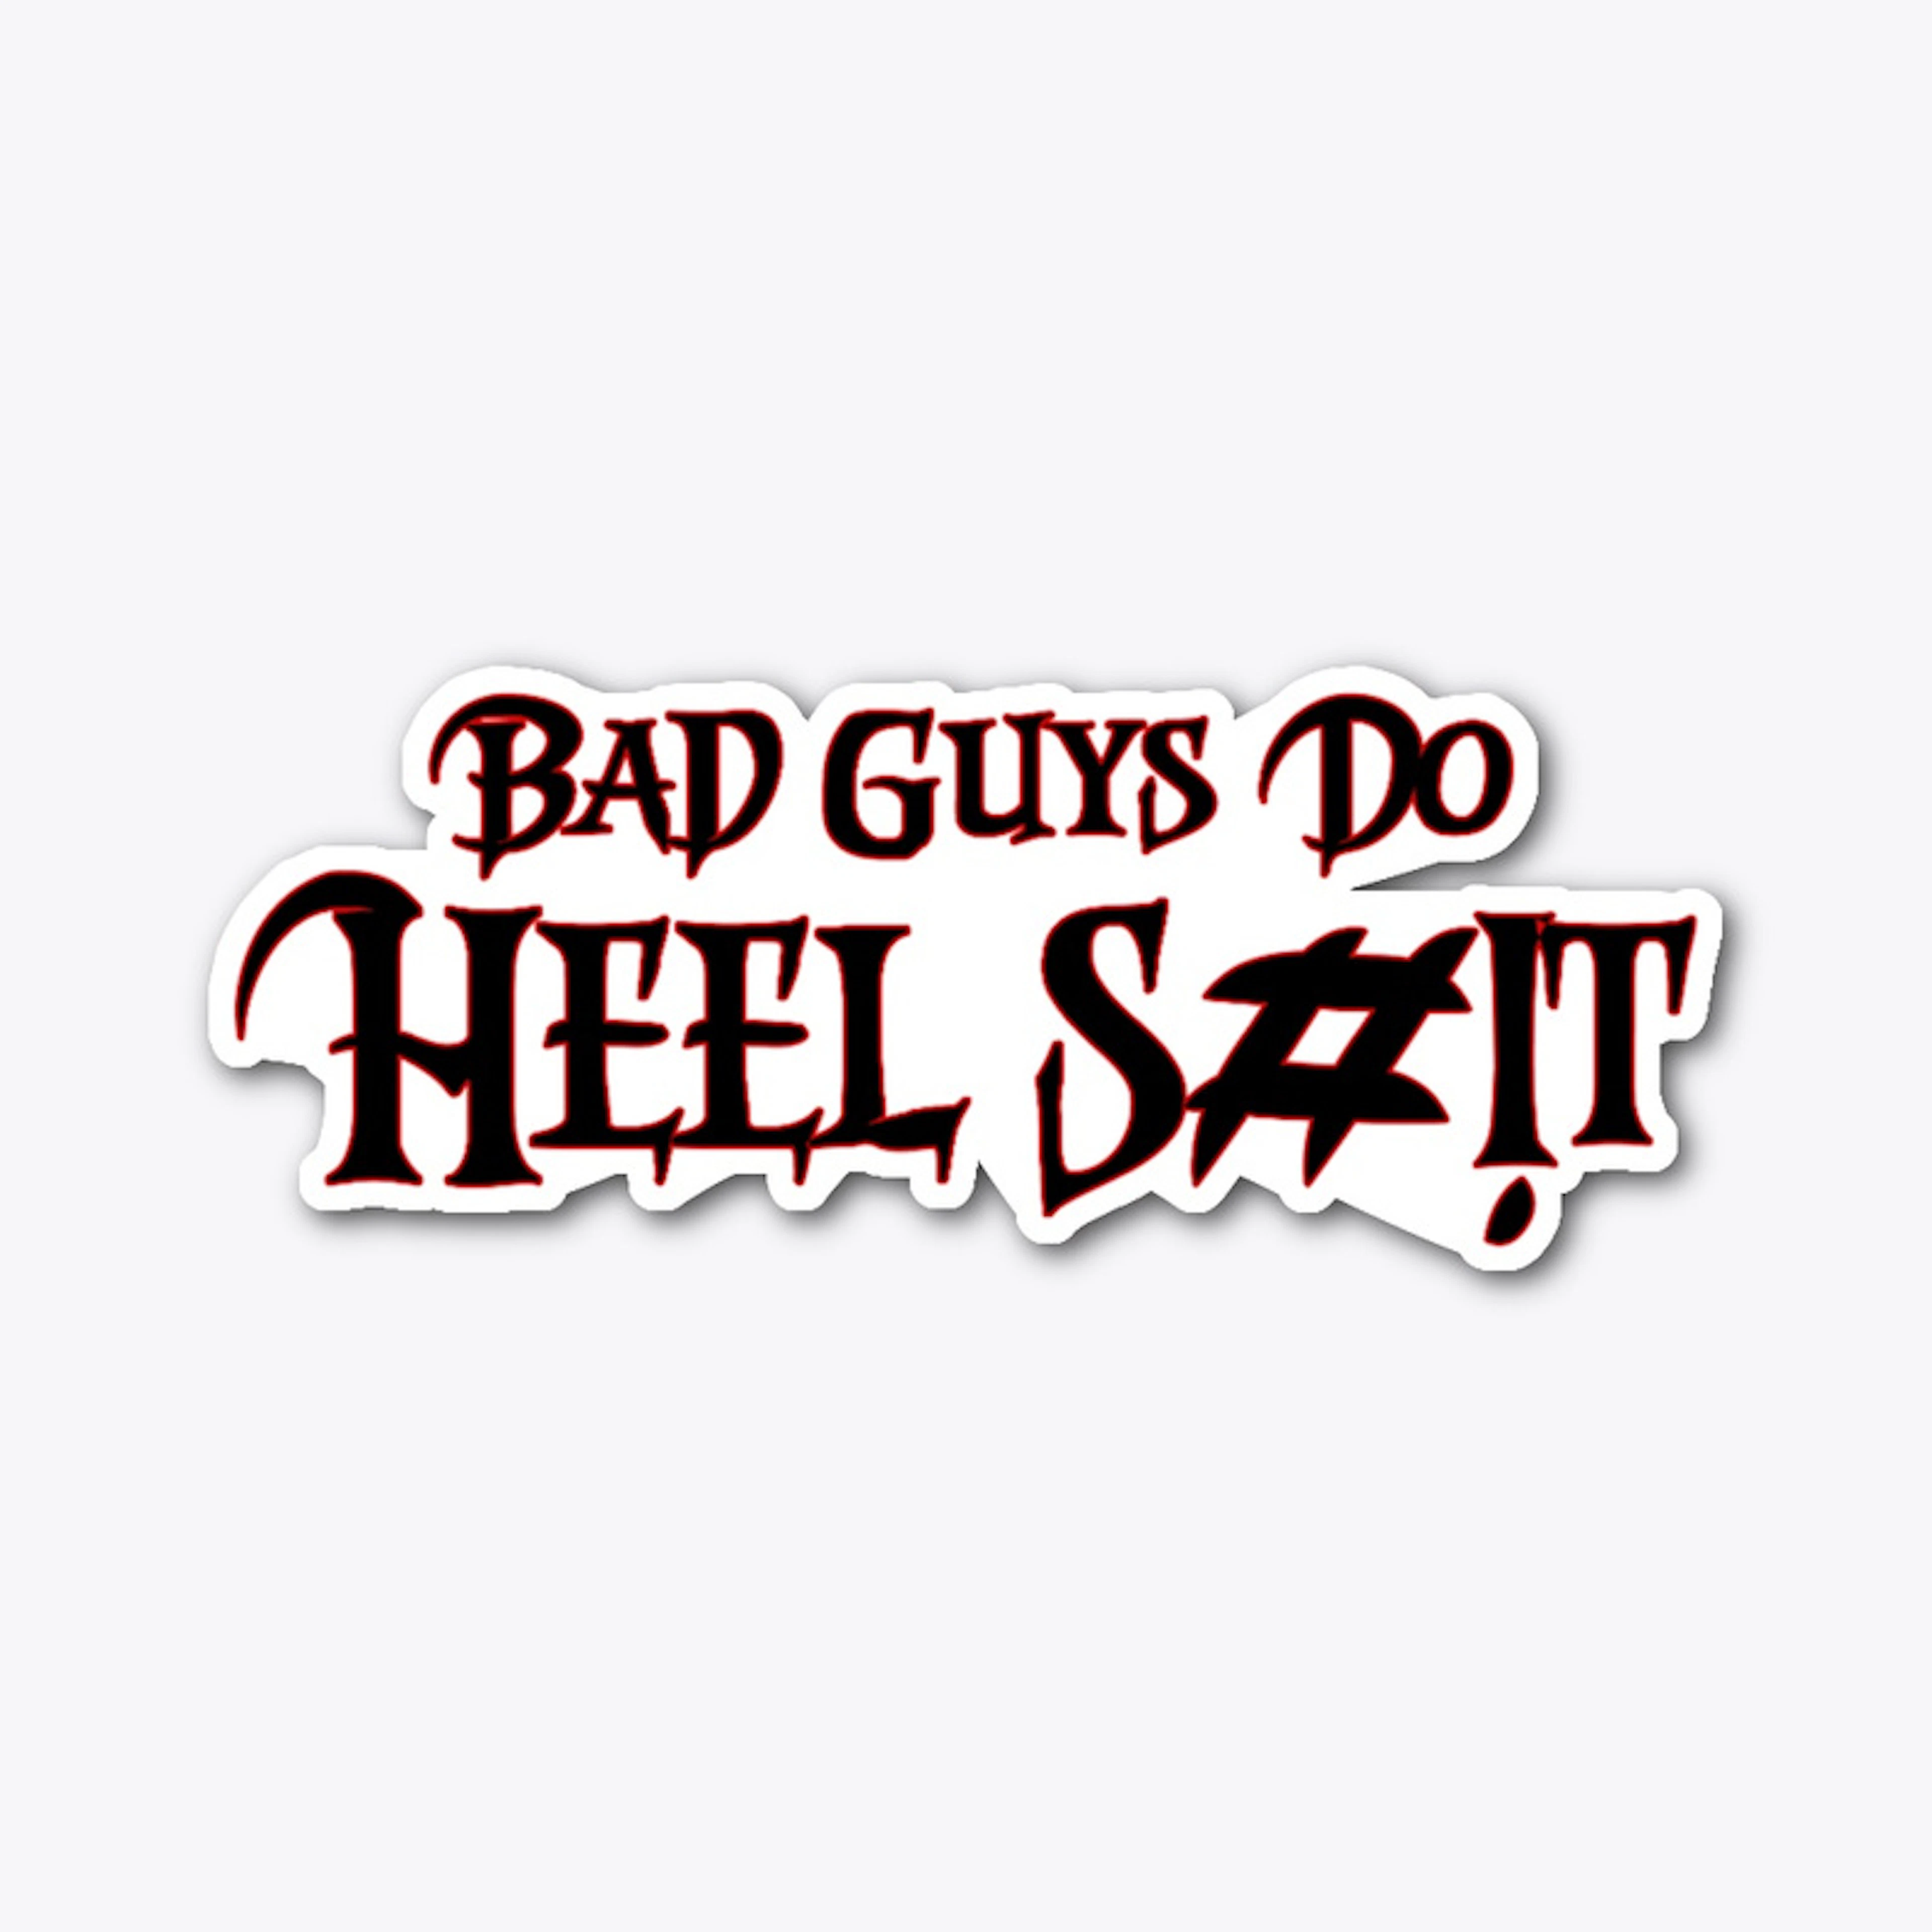 Bad Guys Do Heel S#!t